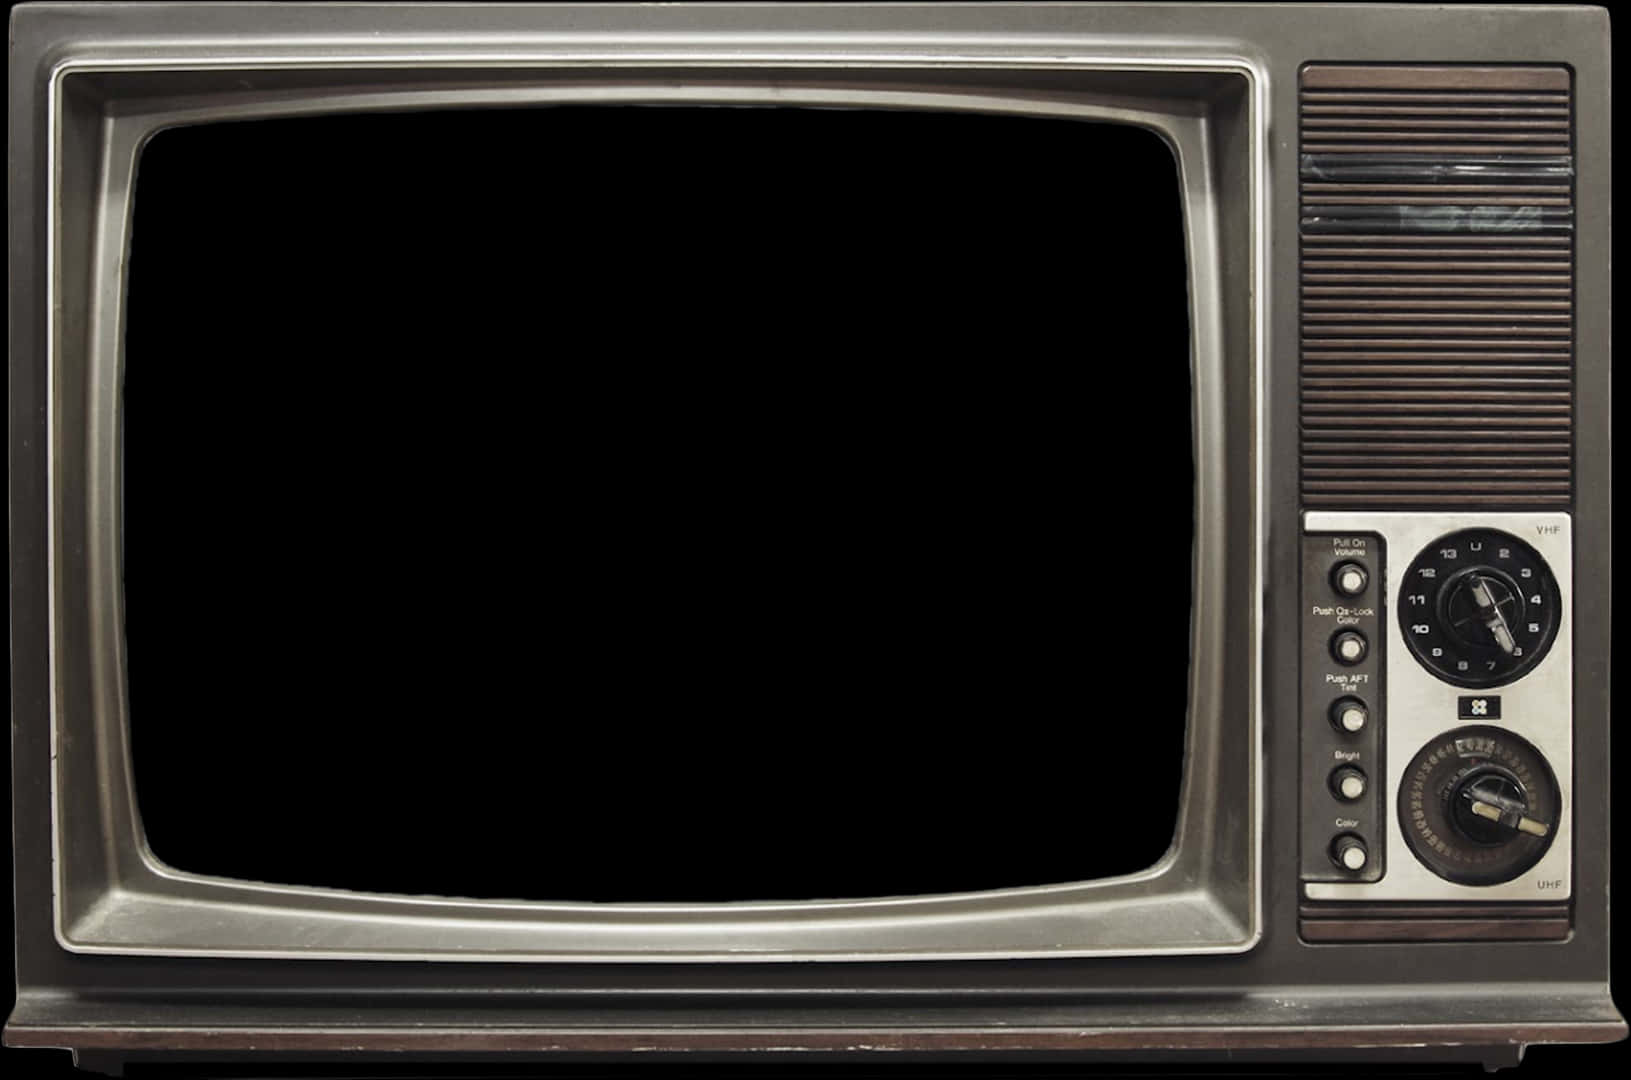 Vintage Television Classic Design